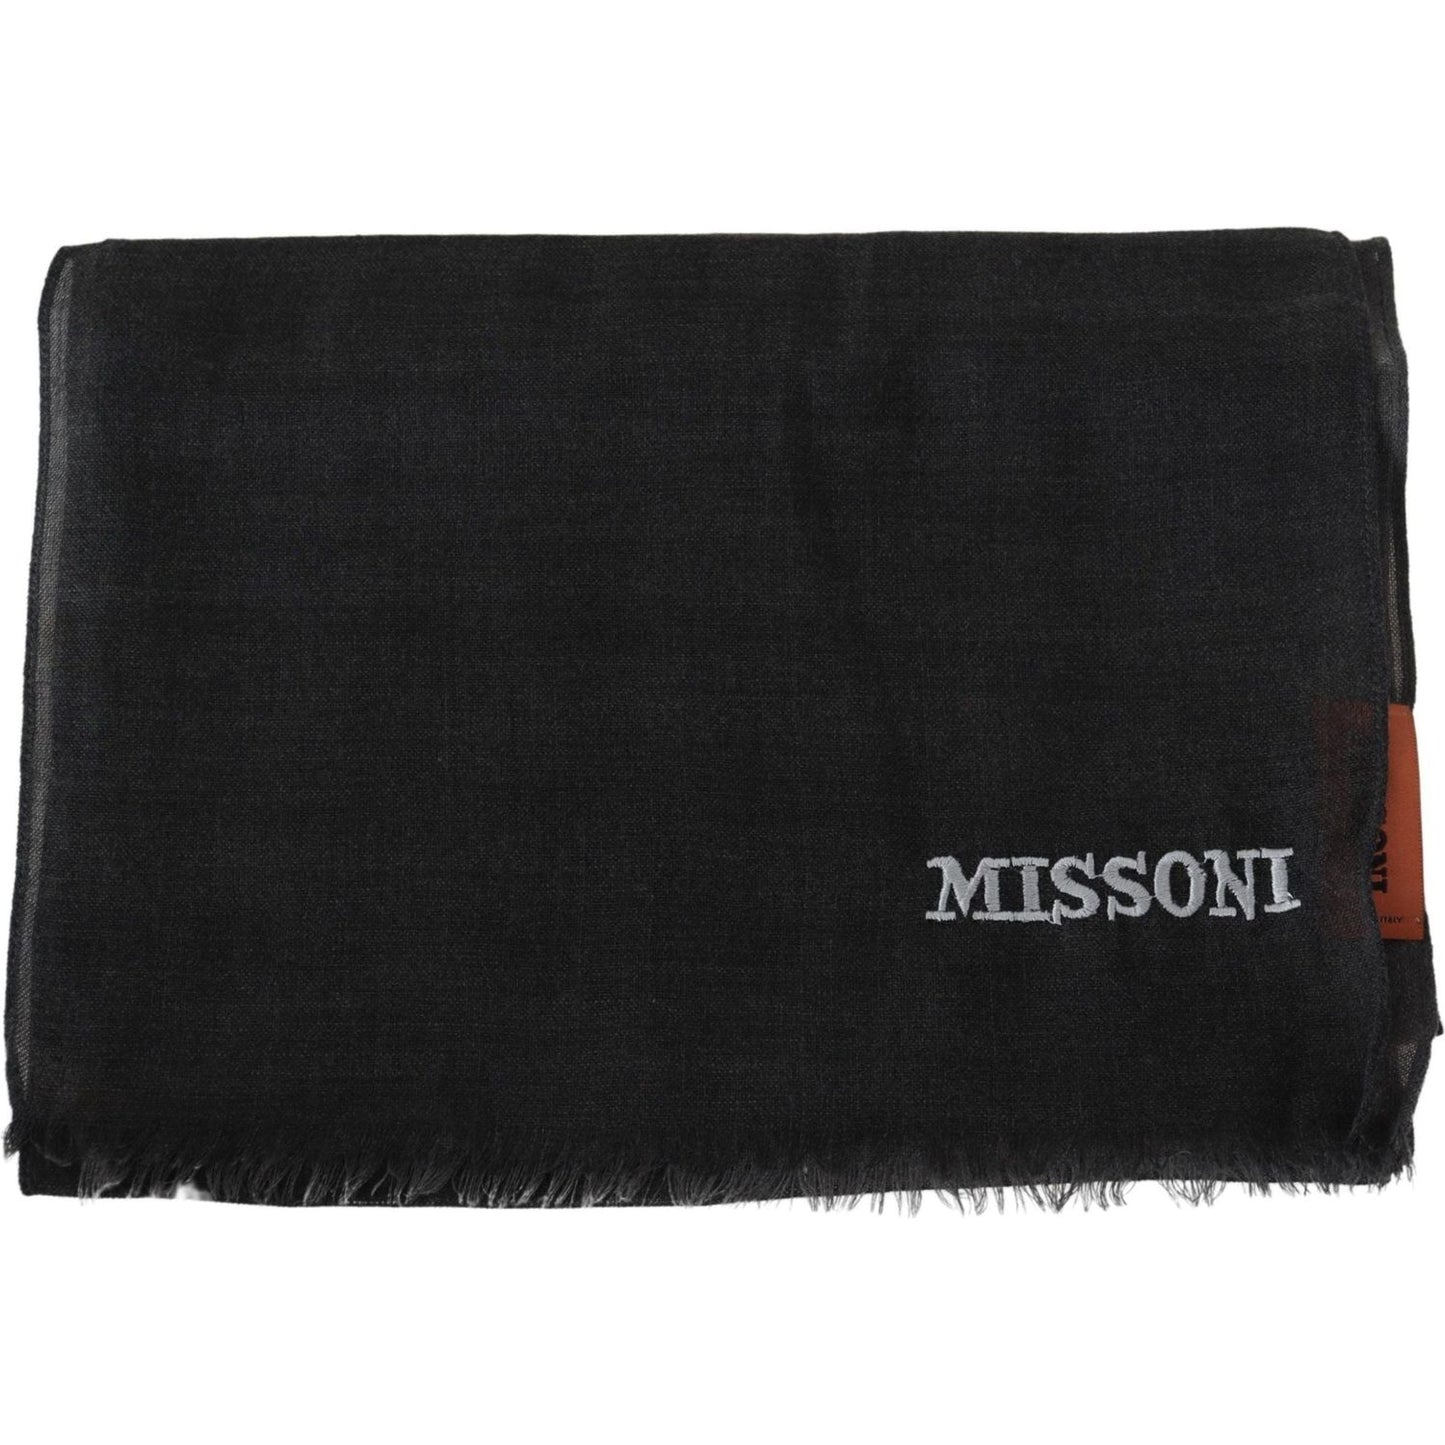 Missoni Sumptuous Wool Scarf with Fringes gray-wool-unisex-neck-wrap-shawl-fringes-logo-scarf